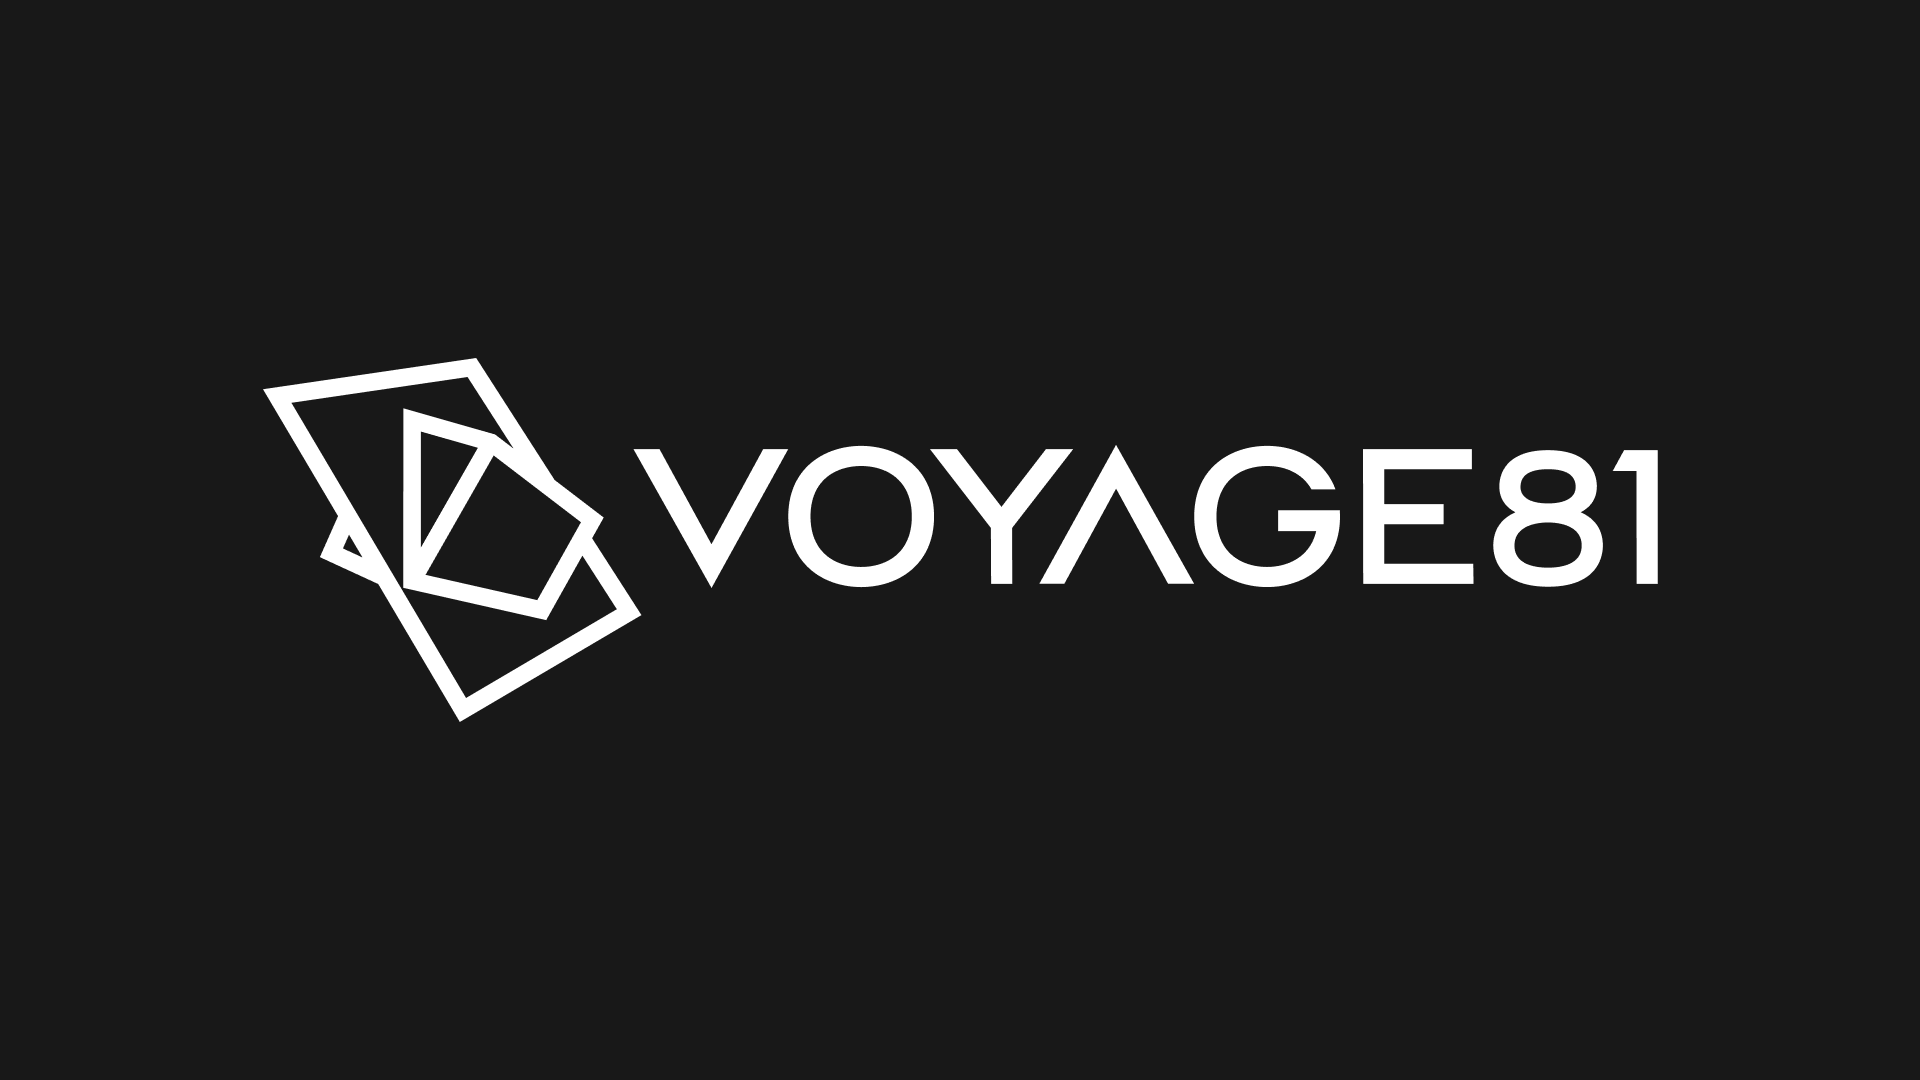 Voyage81